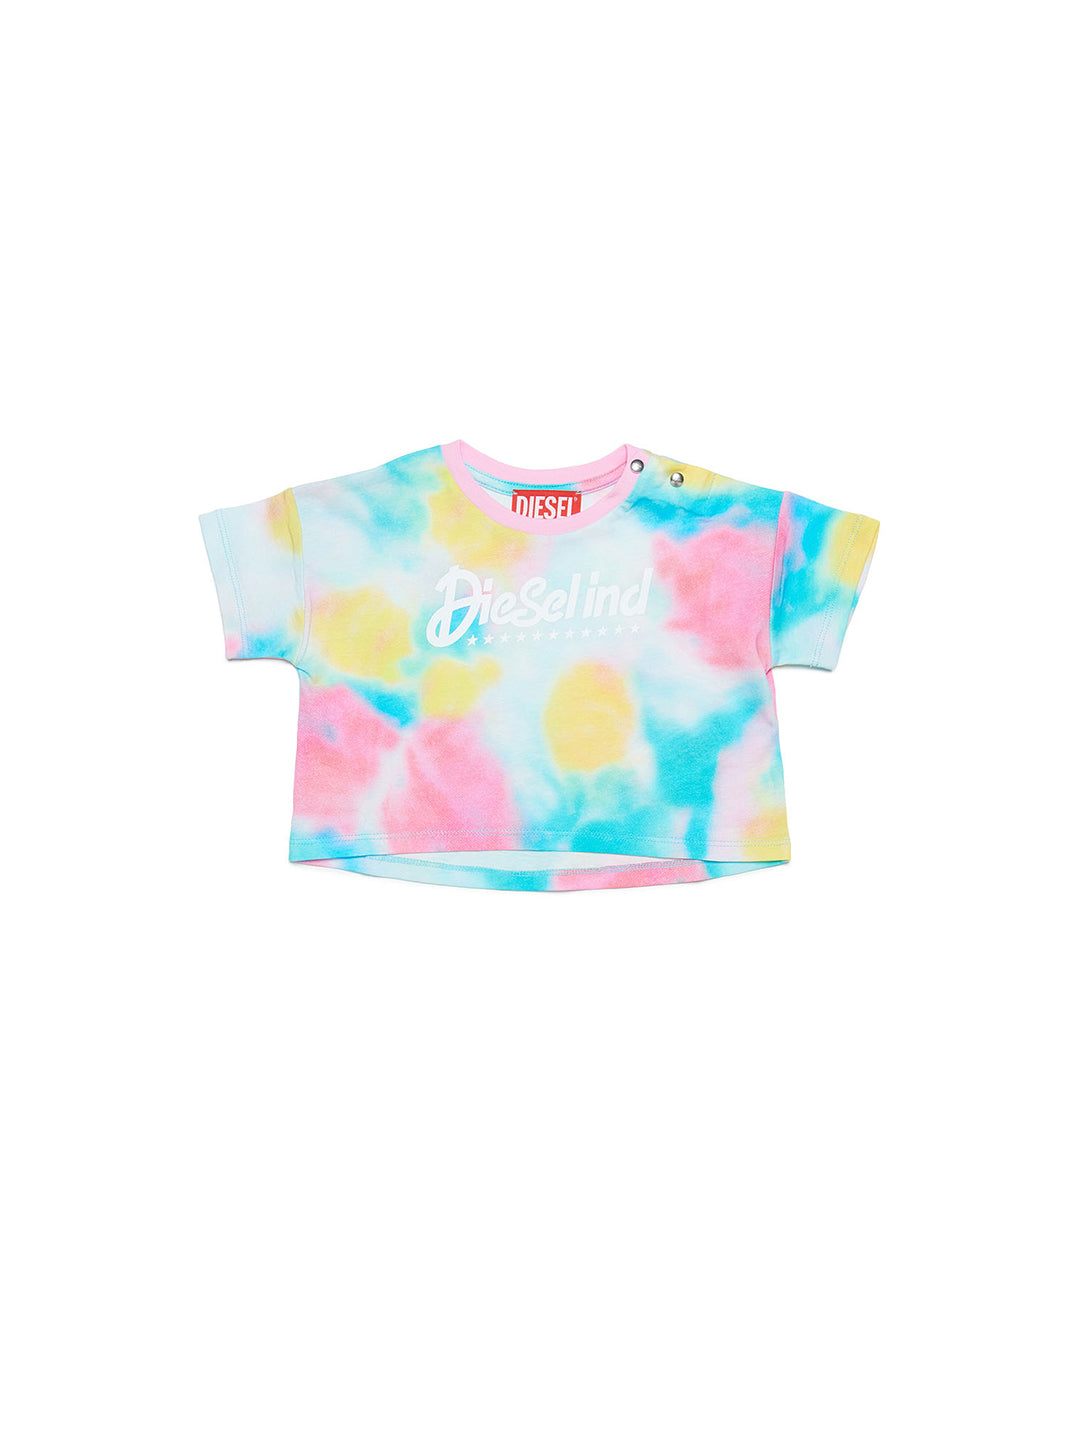 Diesel t shirt multicolor neonati